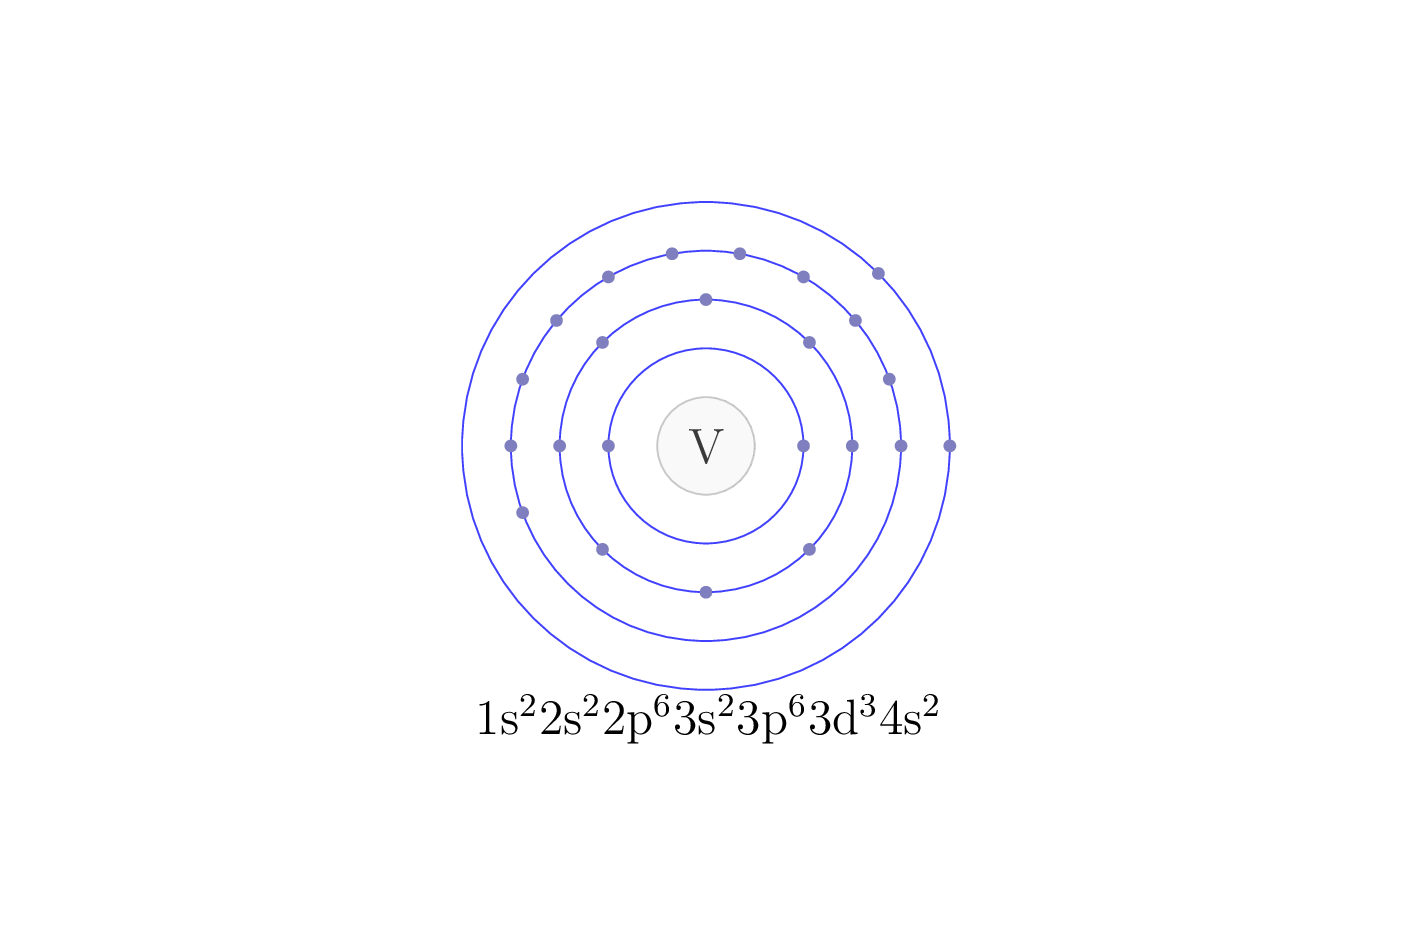 electron configuration of element V